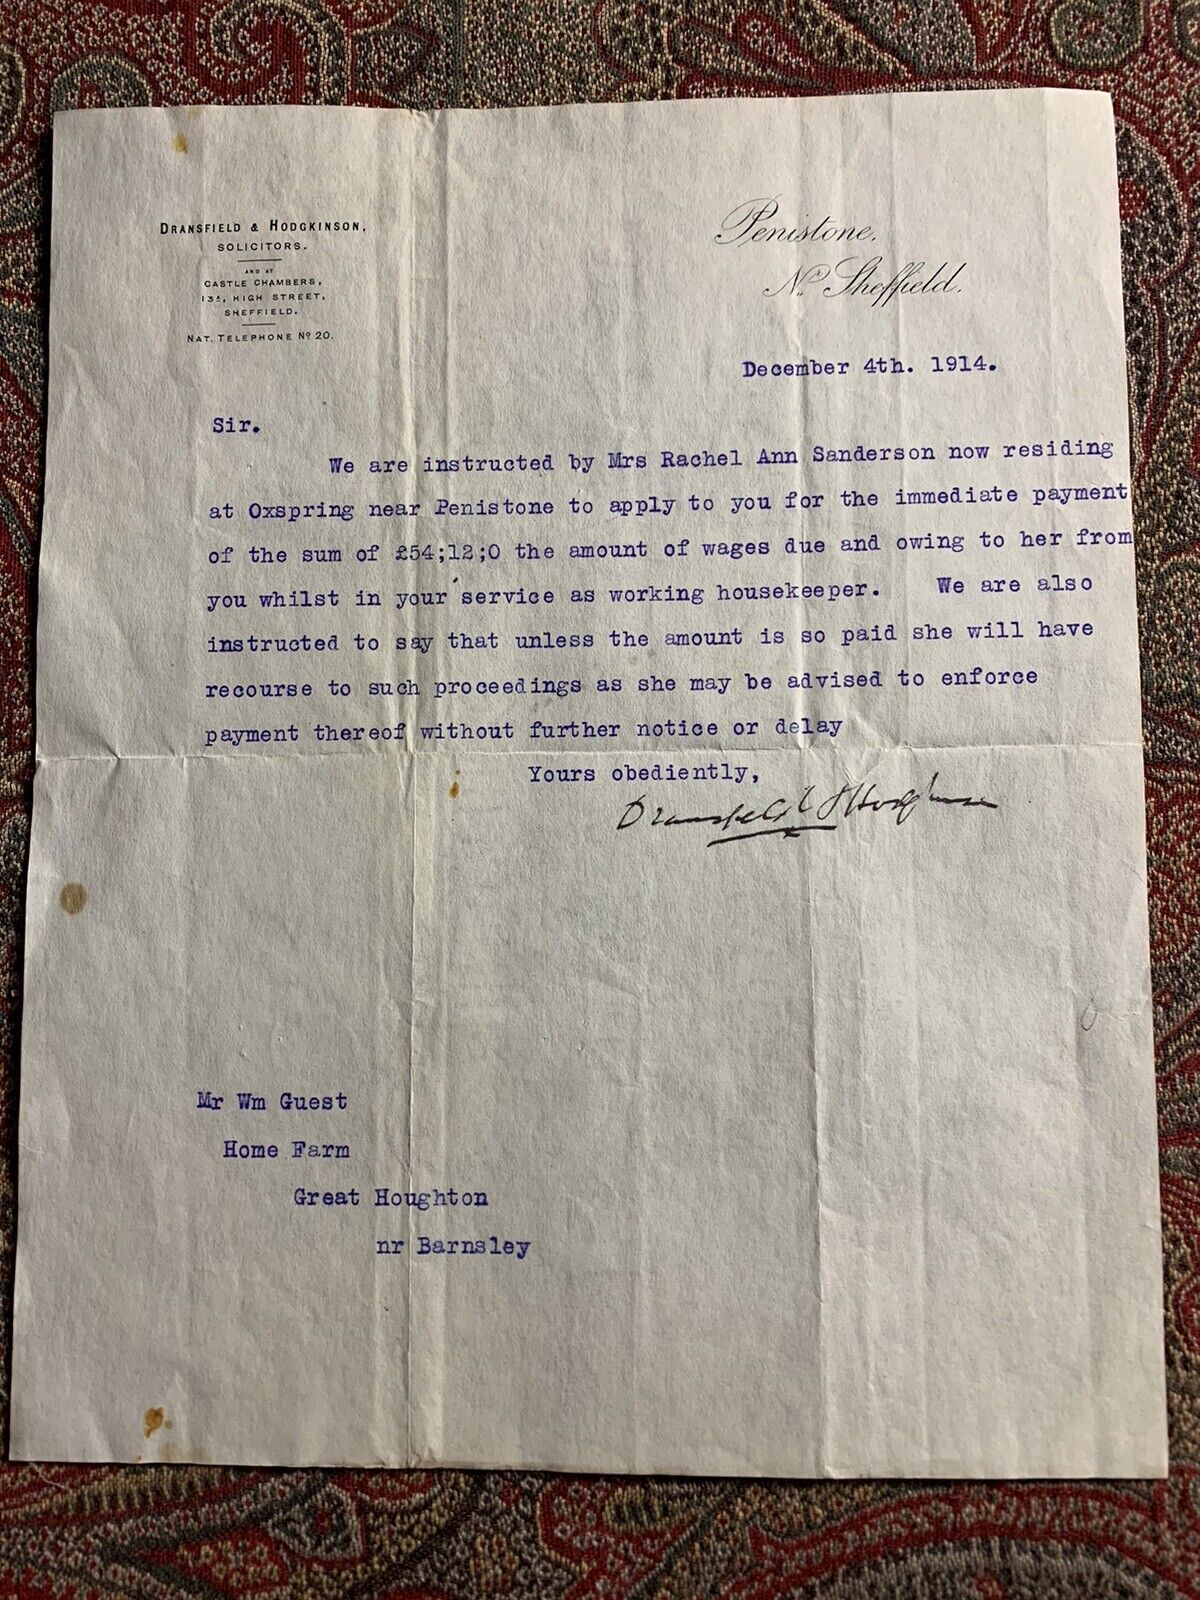 1914 Letter Rachel Ann Sanderson Unpaid Wages Home Farm Great Houghton Yorkshire